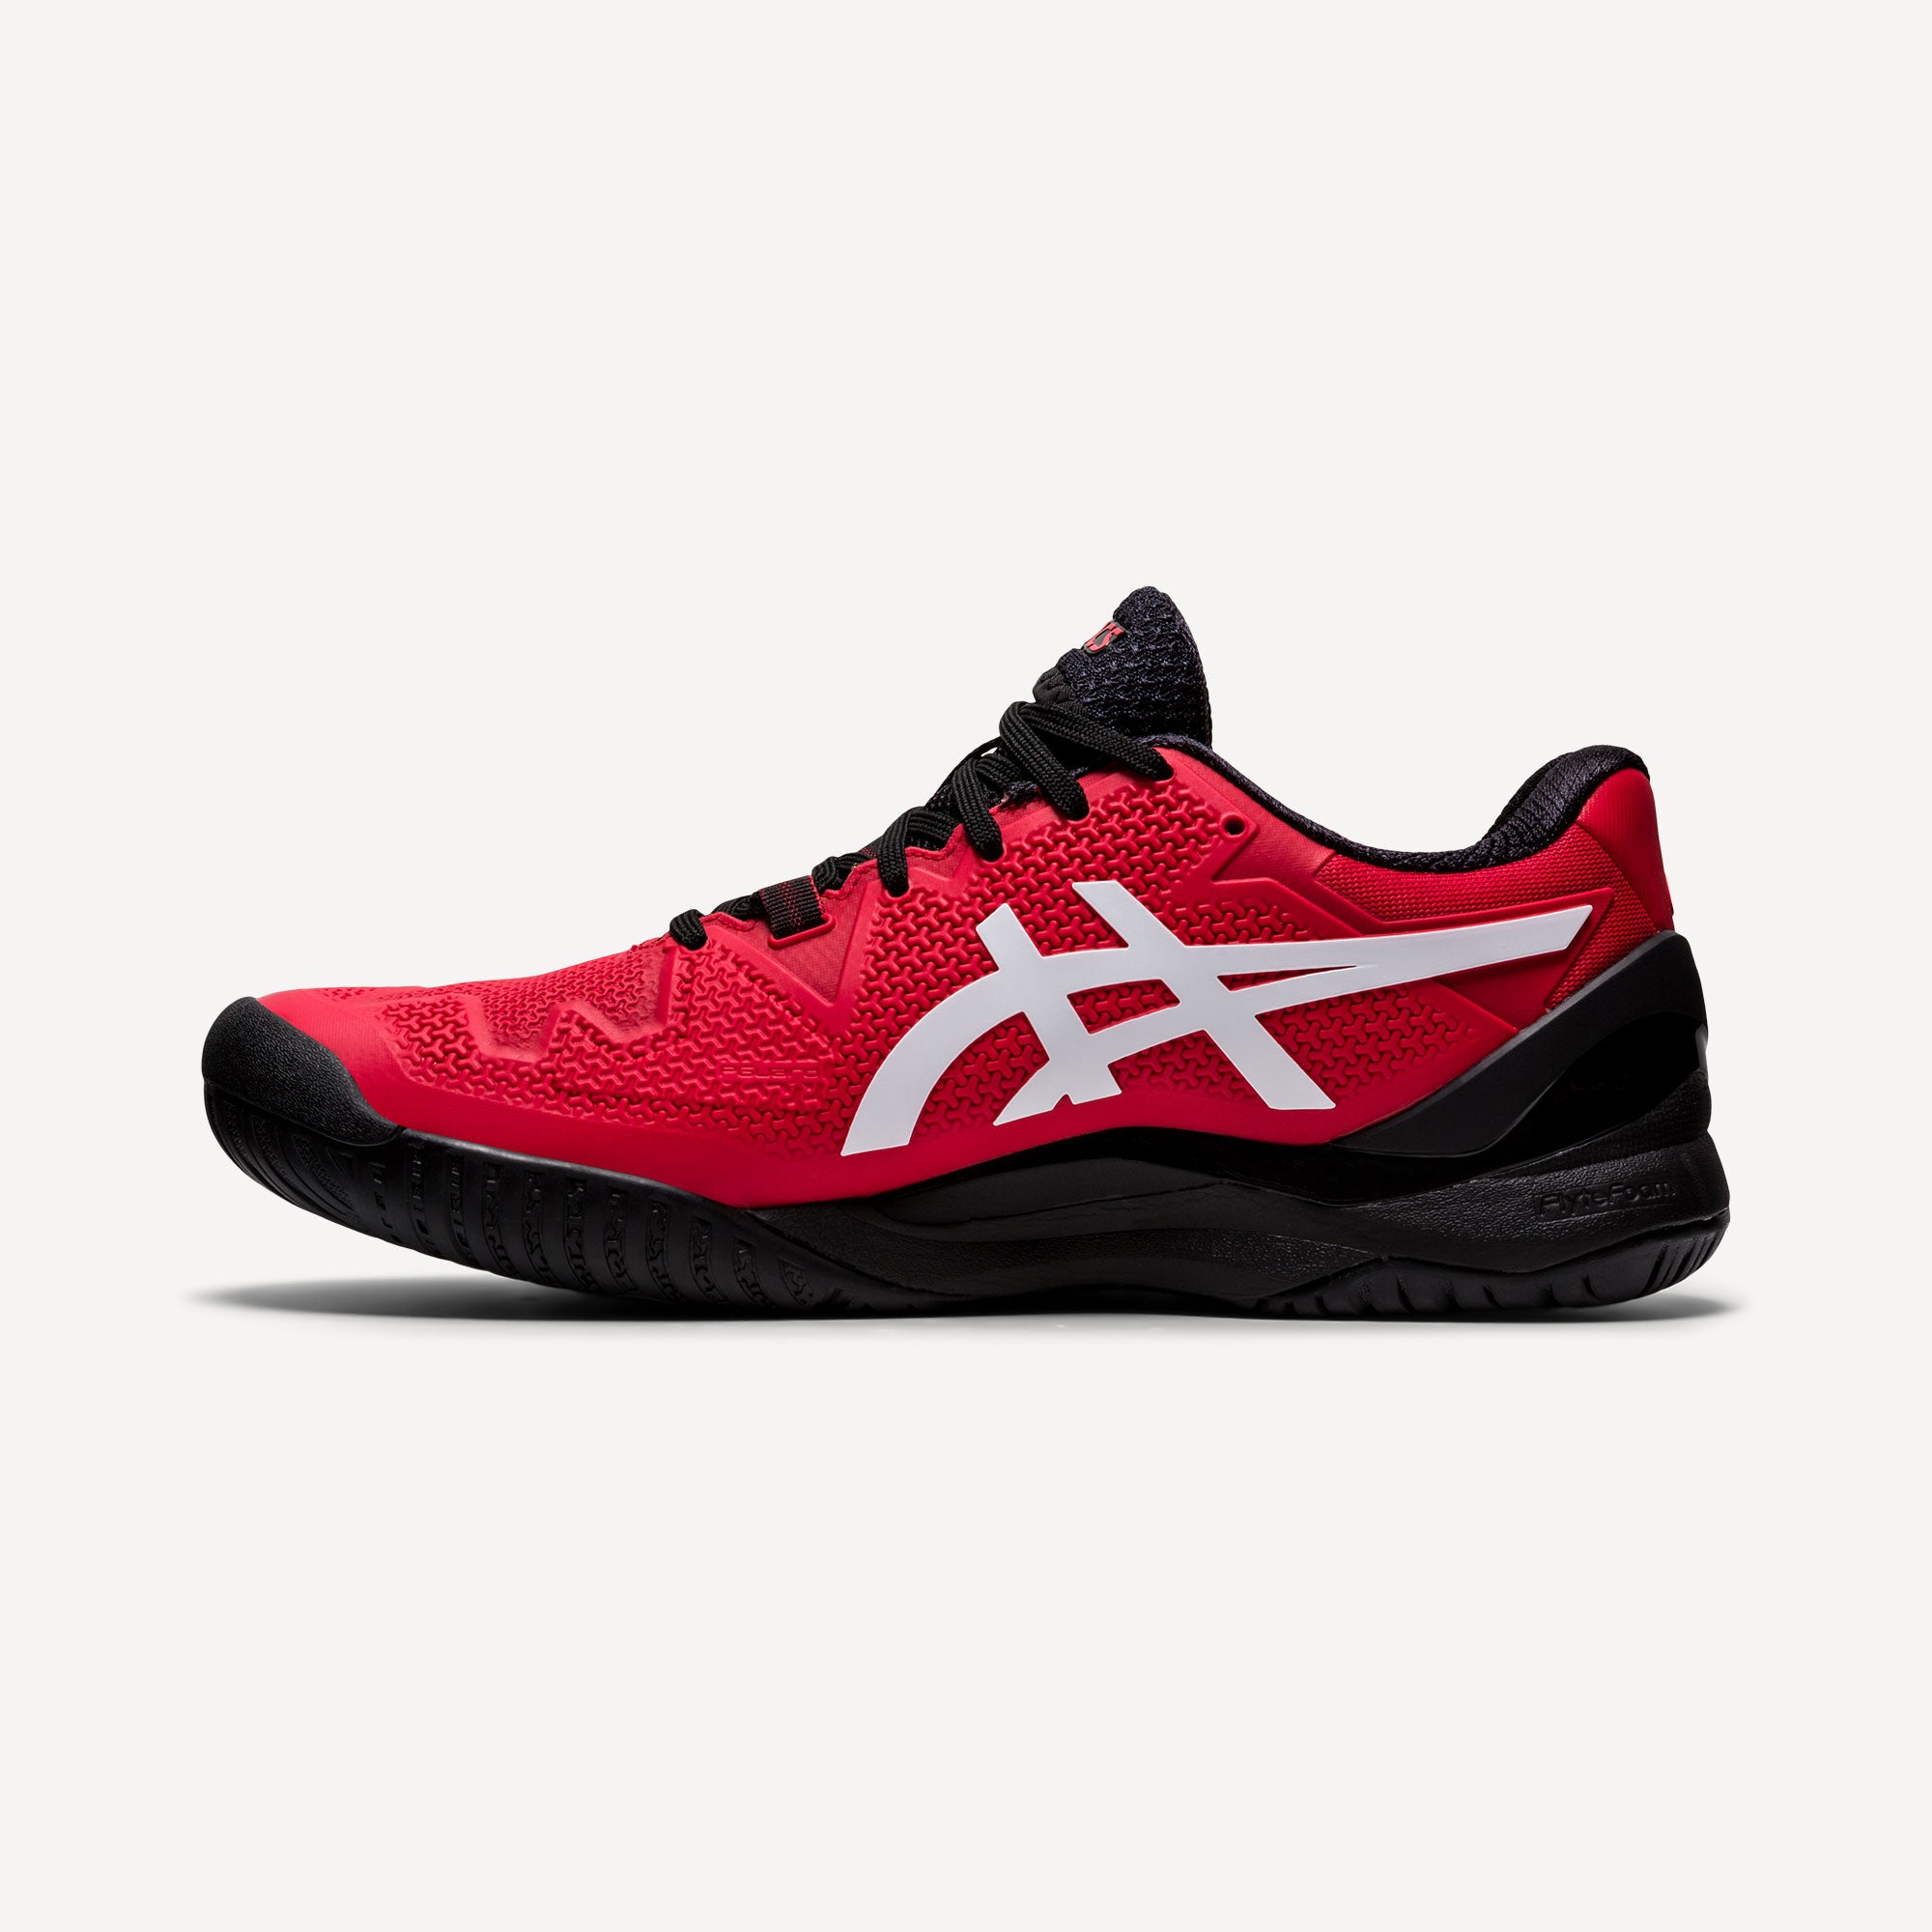 ASICS Gel-Resolution 8 Men's Hard Court Tennis Shoes Red (3)